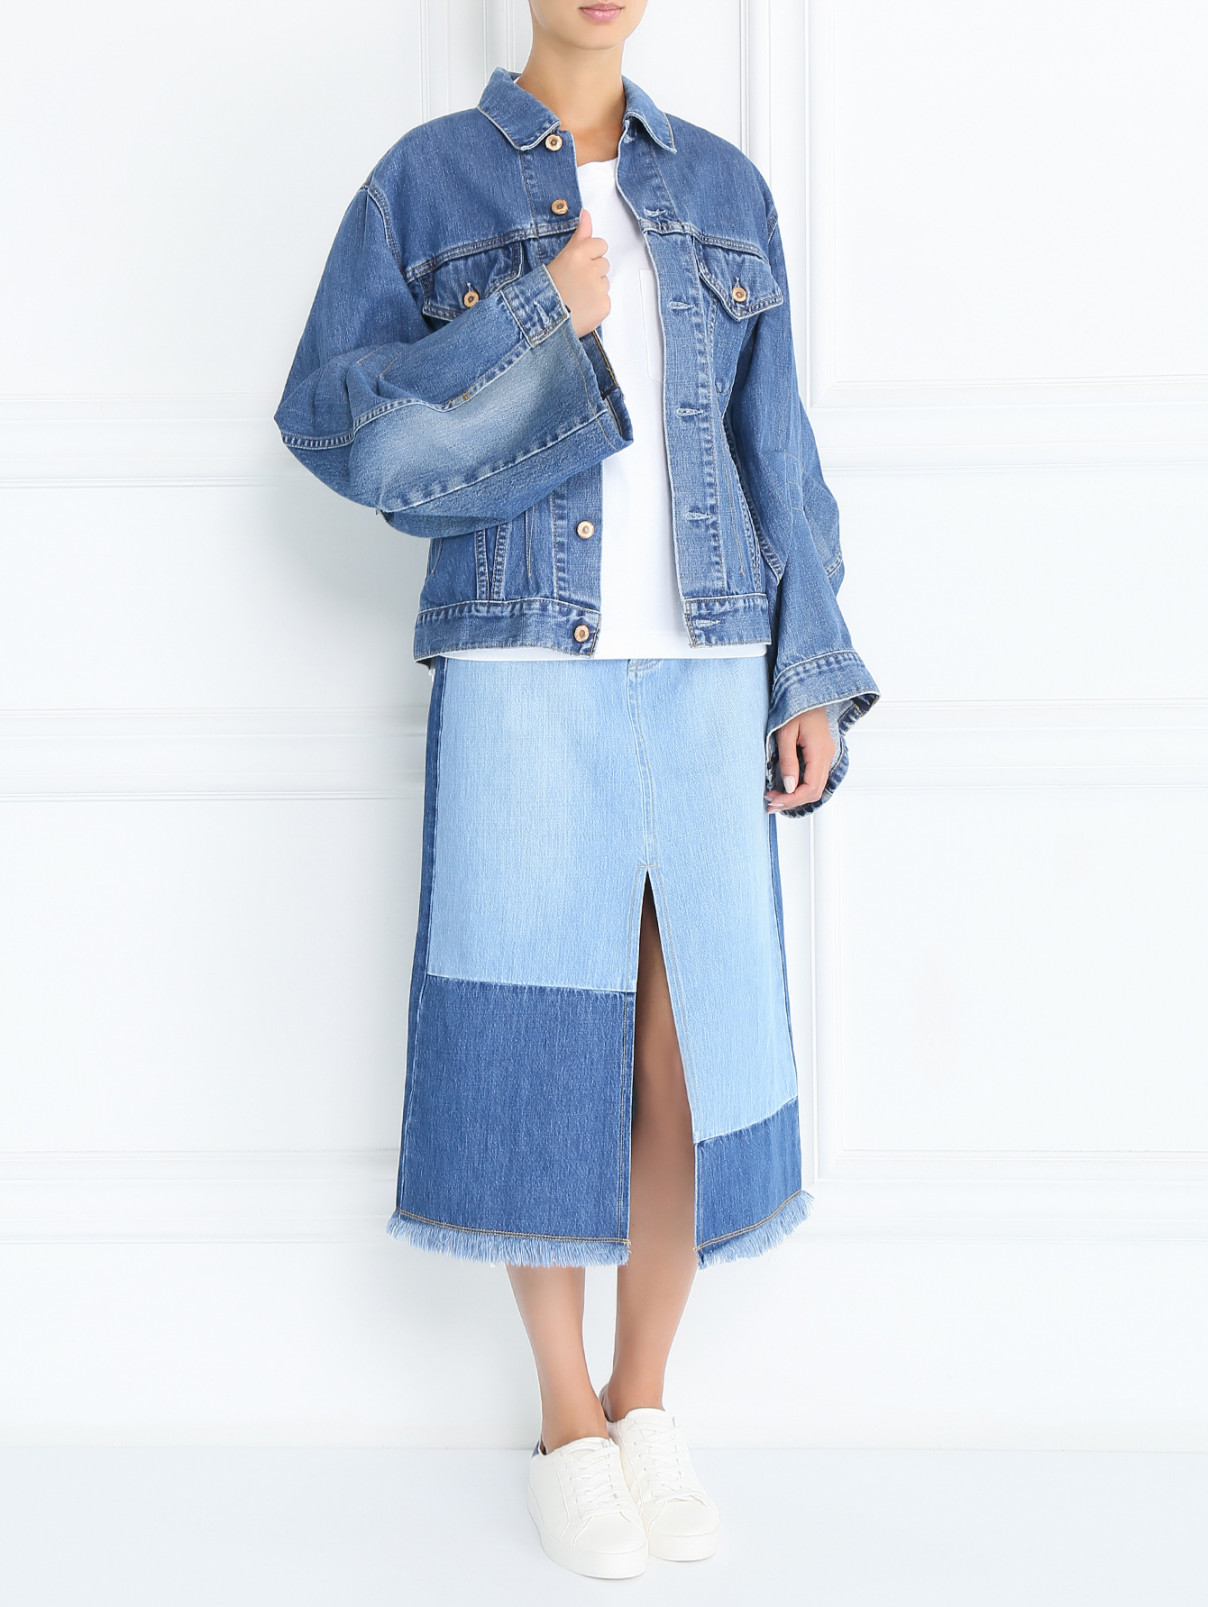 Куртка из денима с широкими рукавами Erika Cavallini  –  Модель Общий вид  – Цвет:  Синий